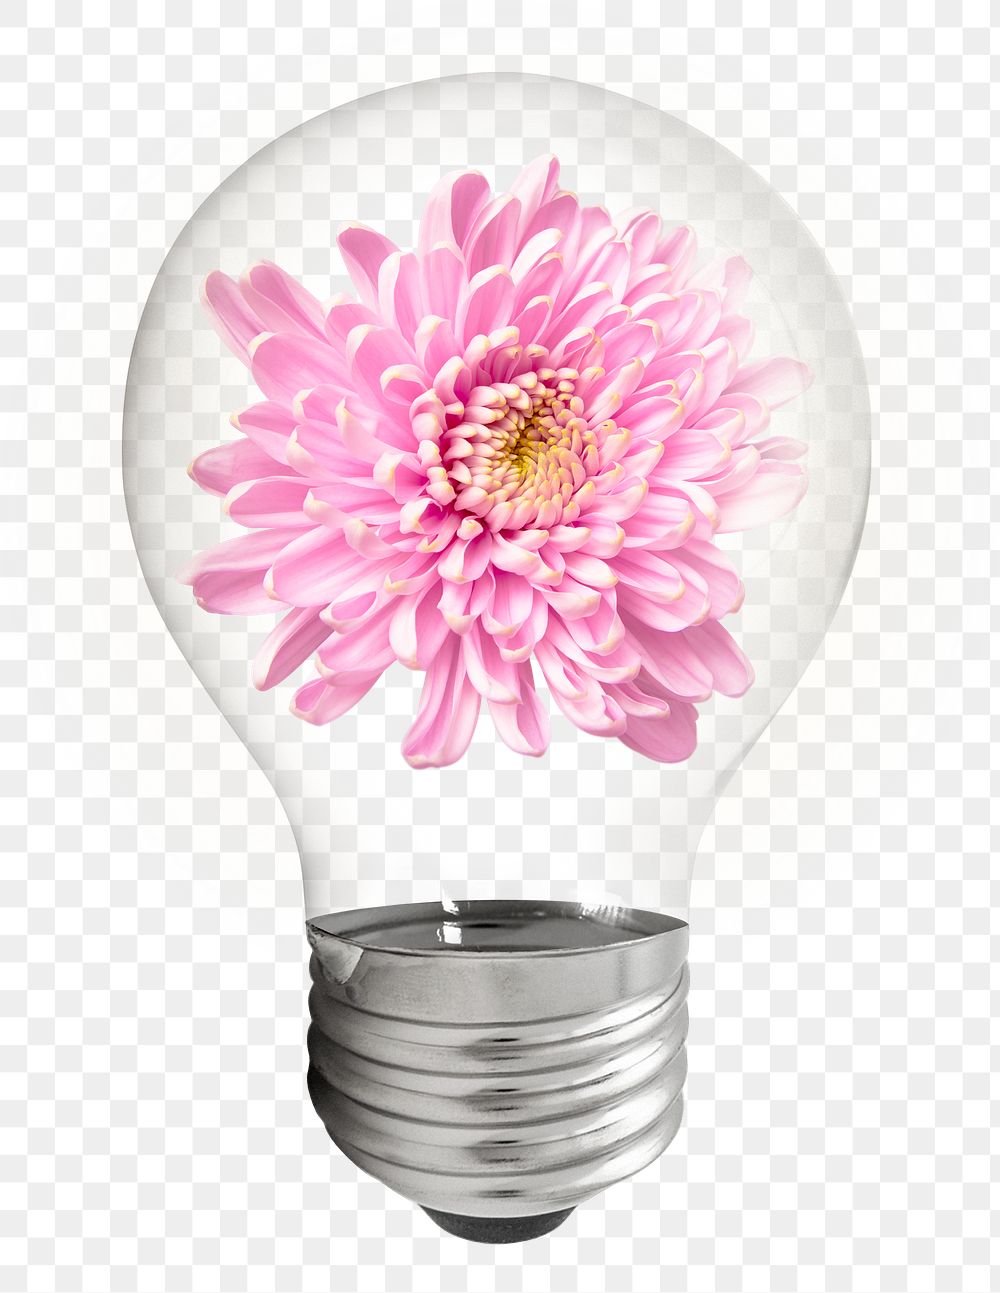 Chrysanthemum flower png sticker light bulb, Spring aesthetic graphic, transparent background